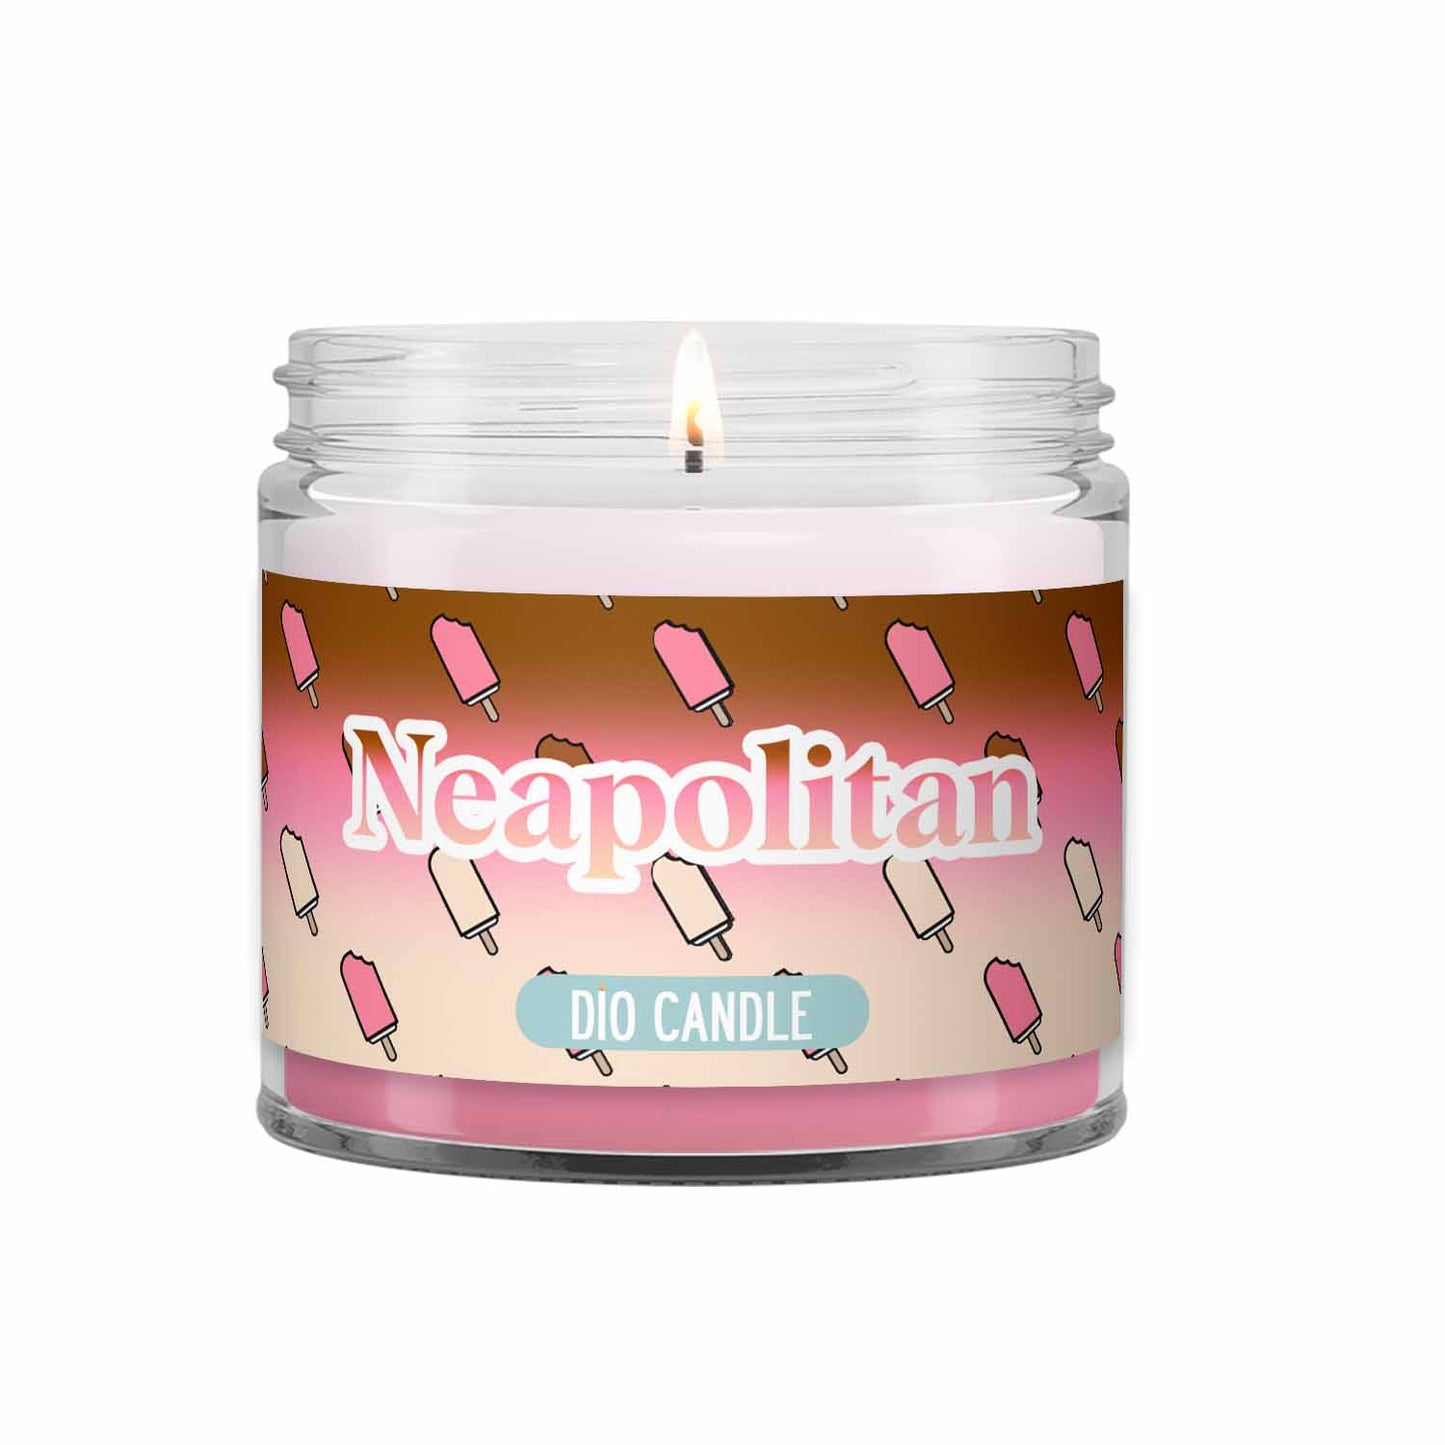 Neapolitan Ice Cream Candle